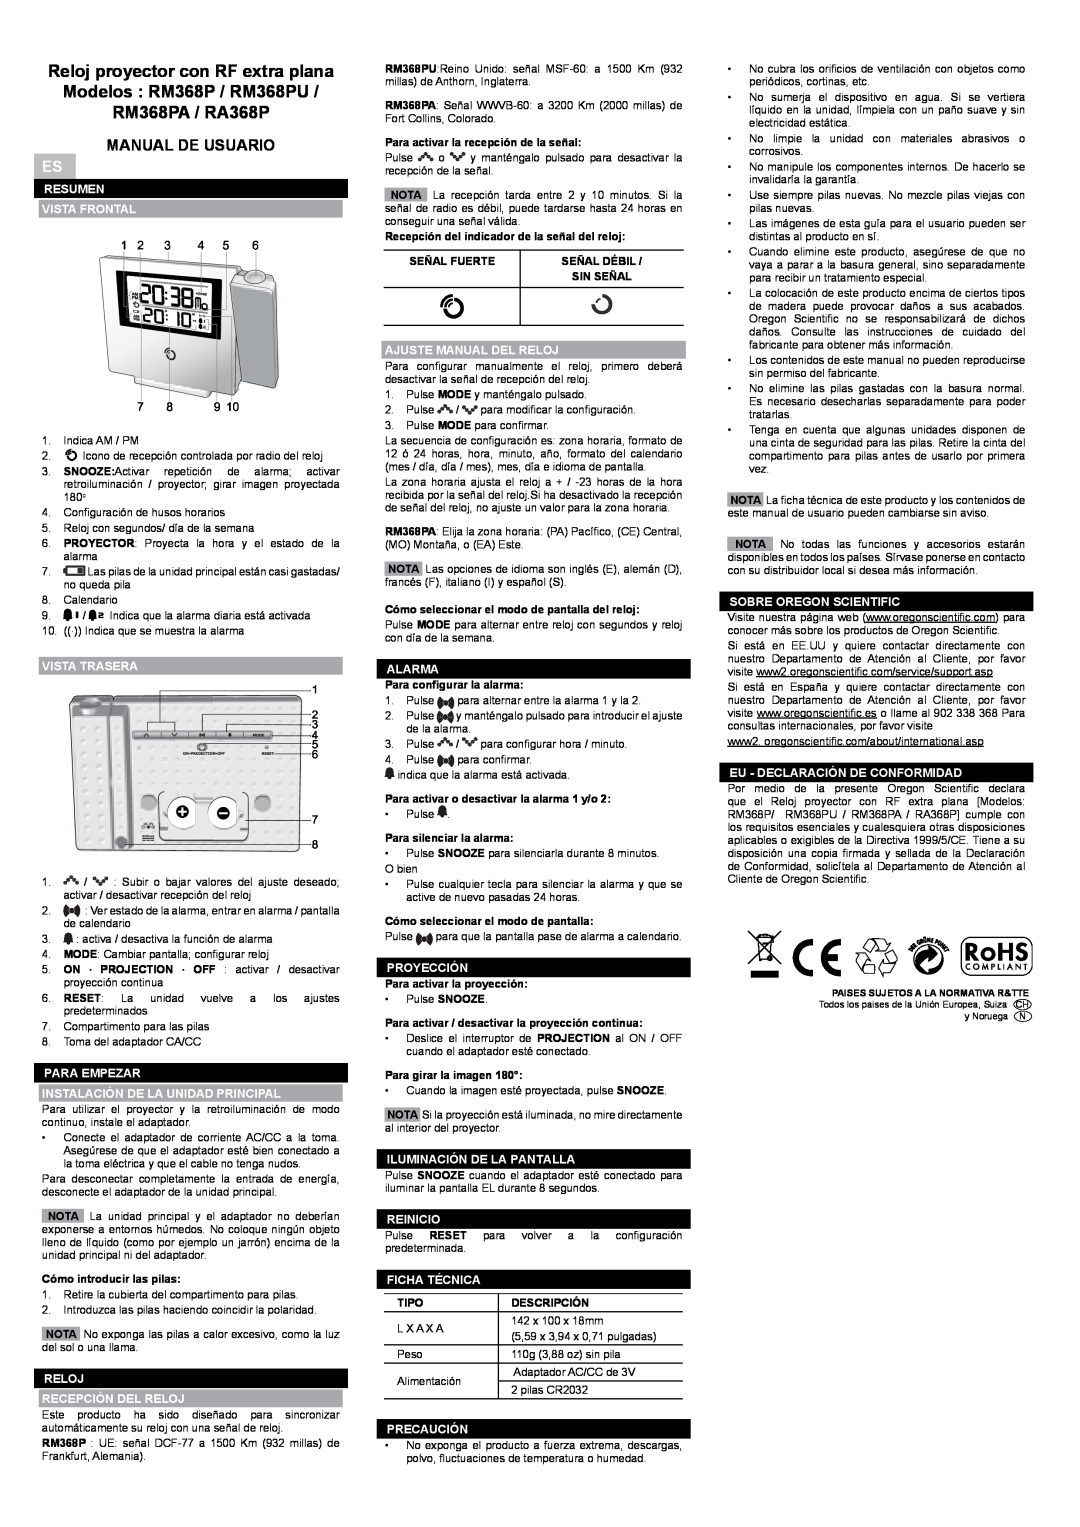 Oregon user manual Reloj proyector con RF extra plana Modelos RM368P / RM368PU, RM368PA / RA368P, Manual De Usuario 